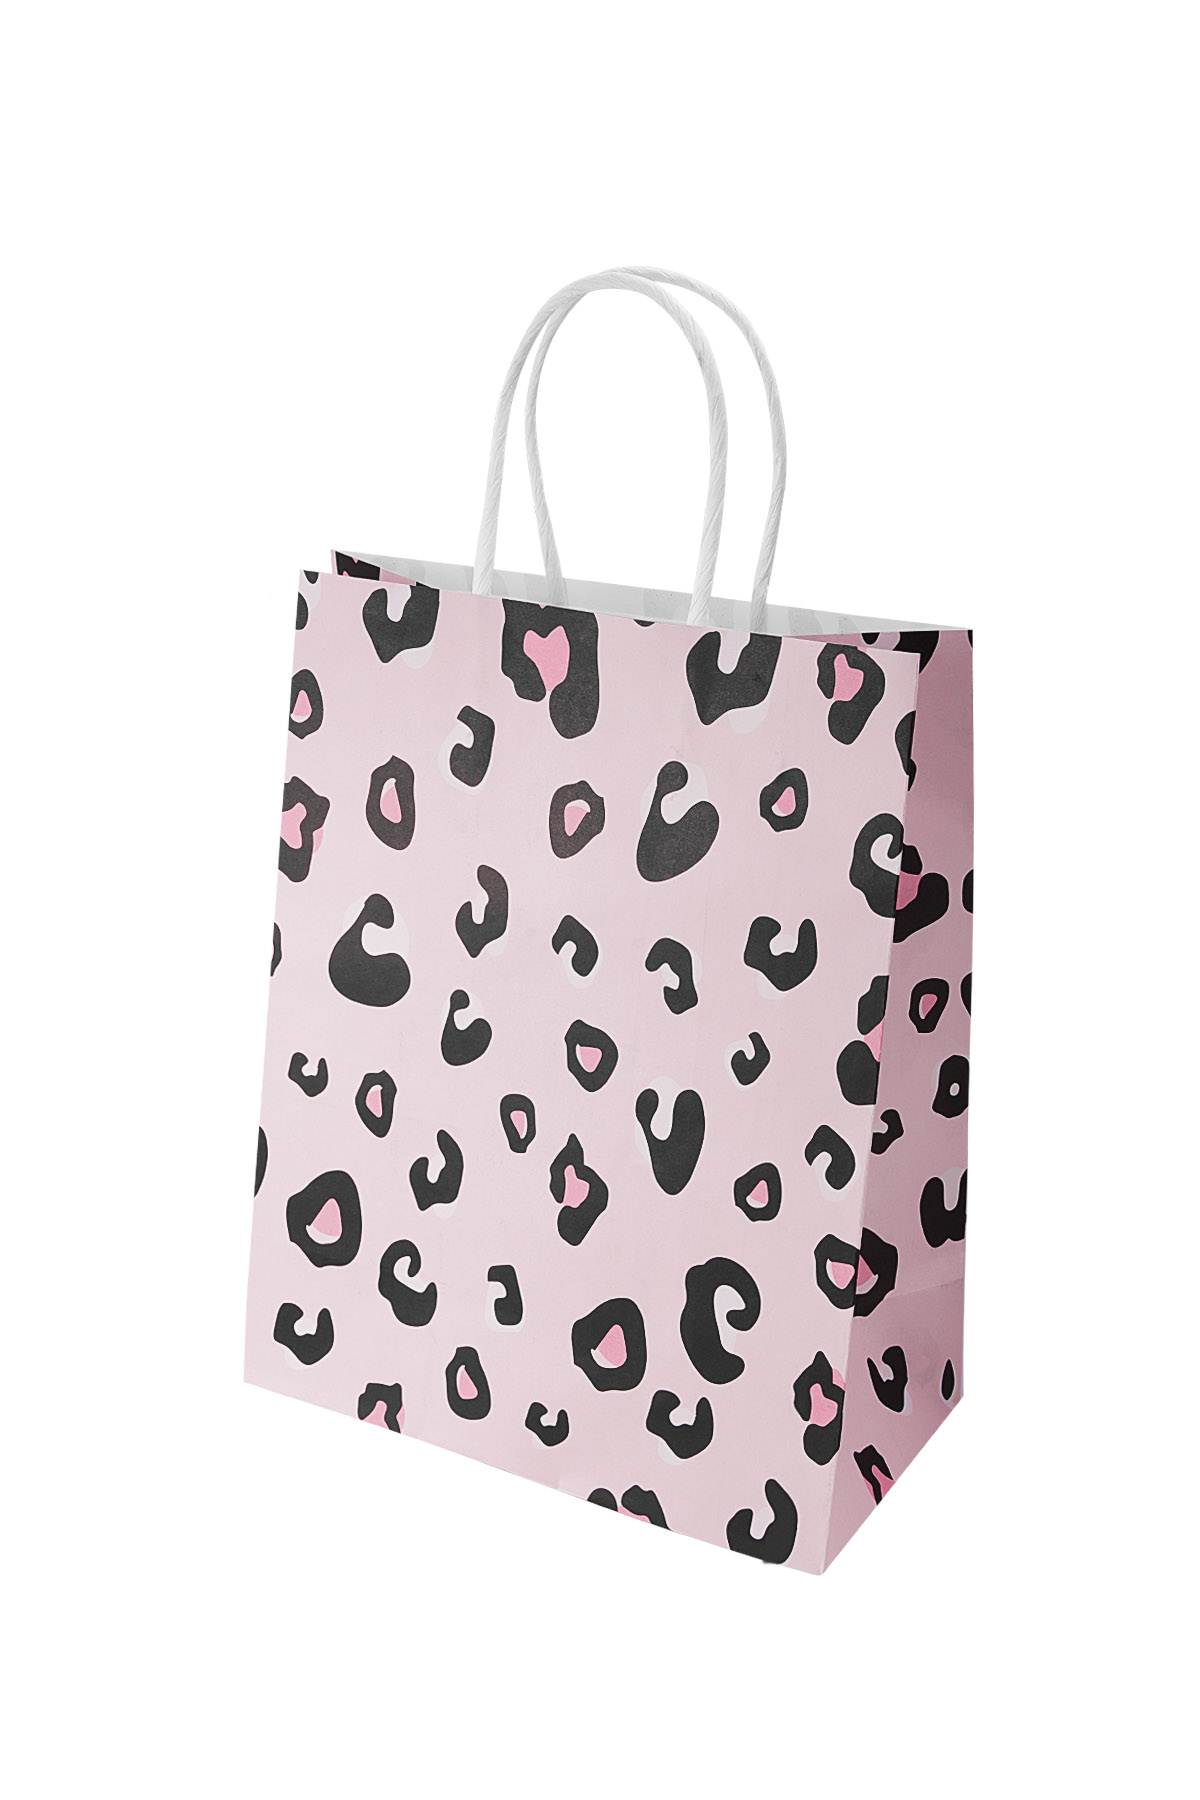 Bags leopard print 50 pieces - pink Paper